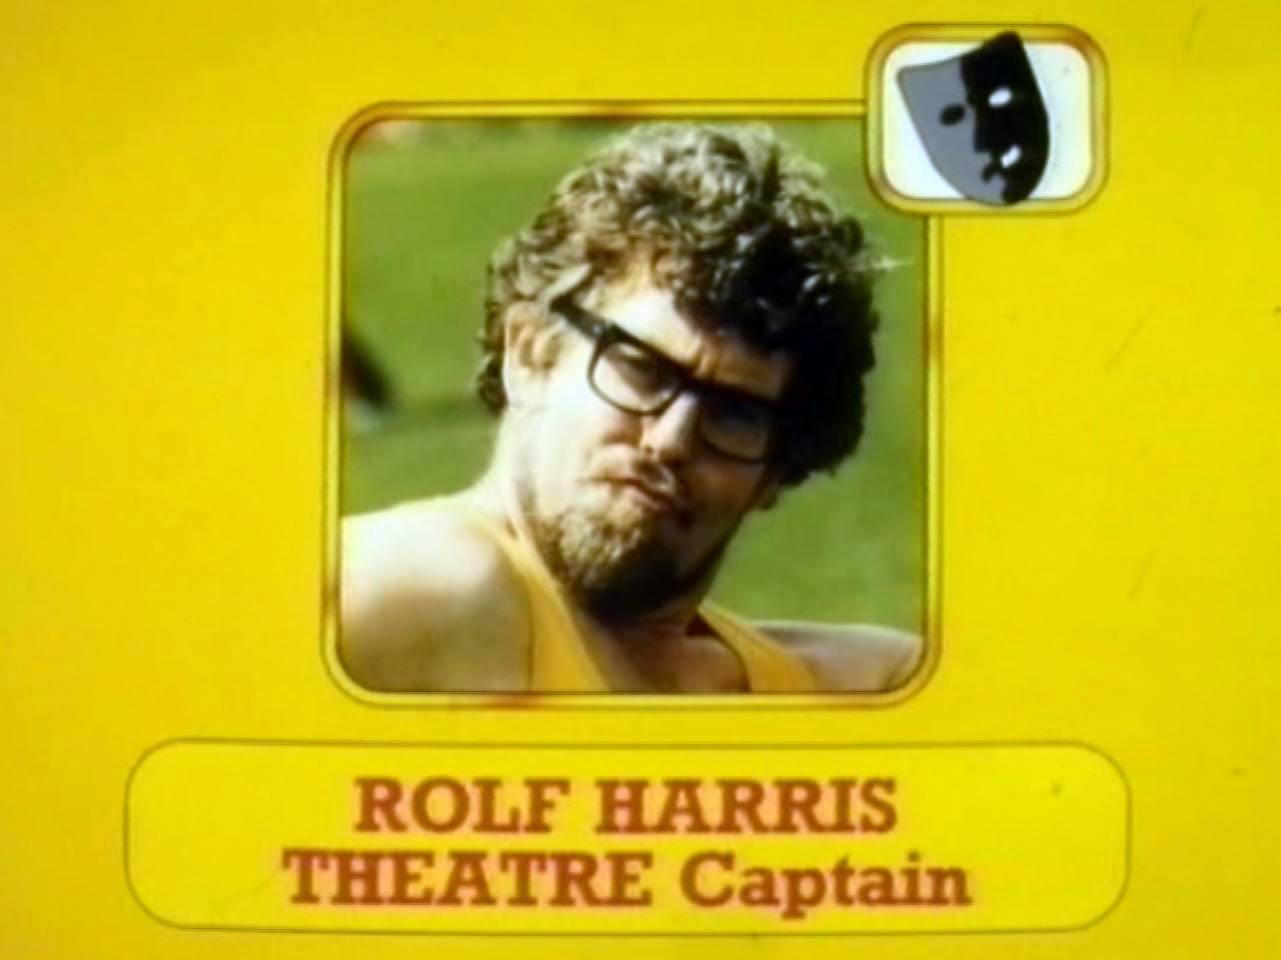 Harris in footage of the ITV programme Star Games, filmed in 1978 in Cambridge.